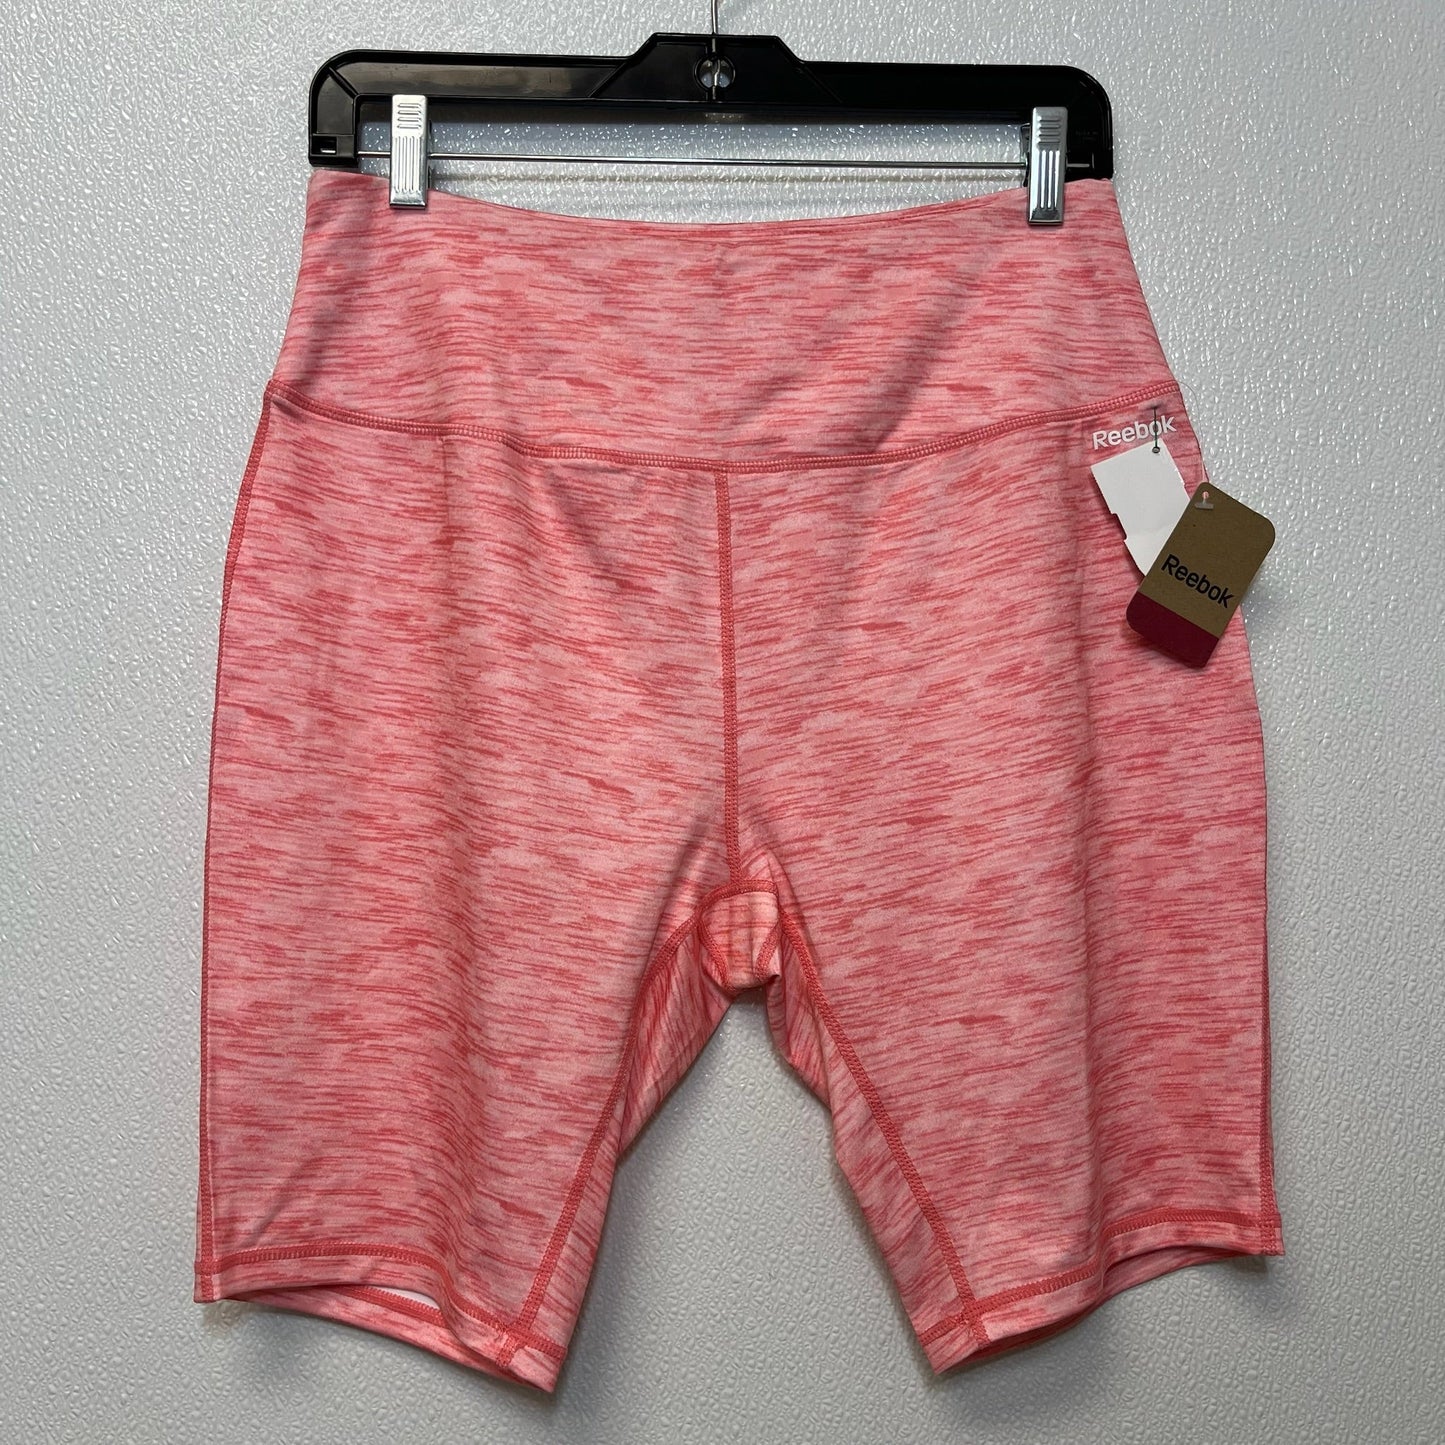 Pink Athletic Shorts Reebok, Size Xl